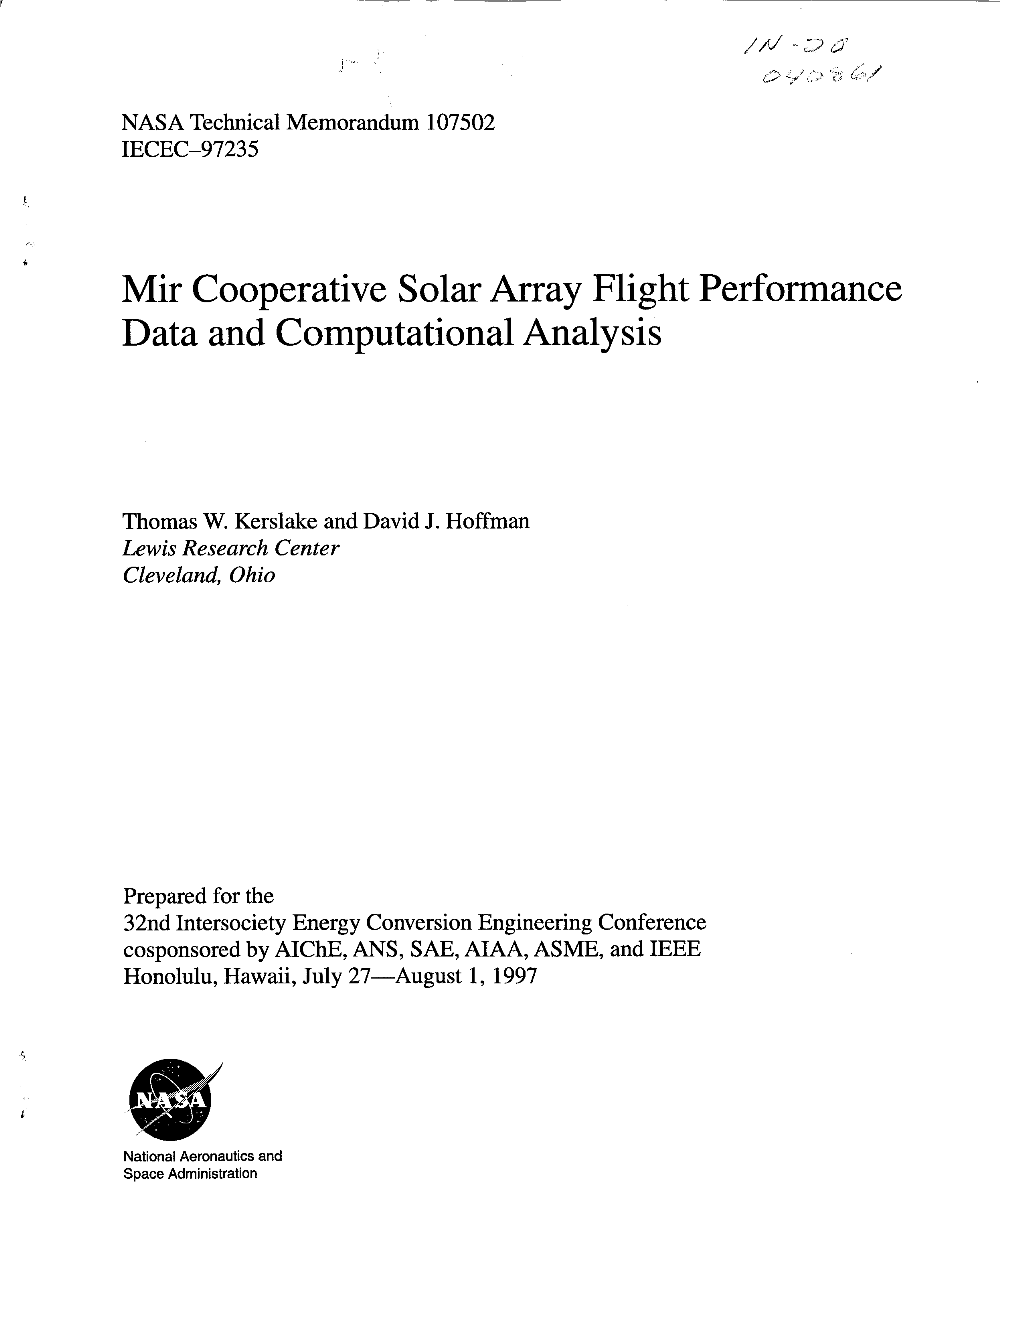 Mir Cooperative Solar Array Flight Performance Data and Computational Analysis